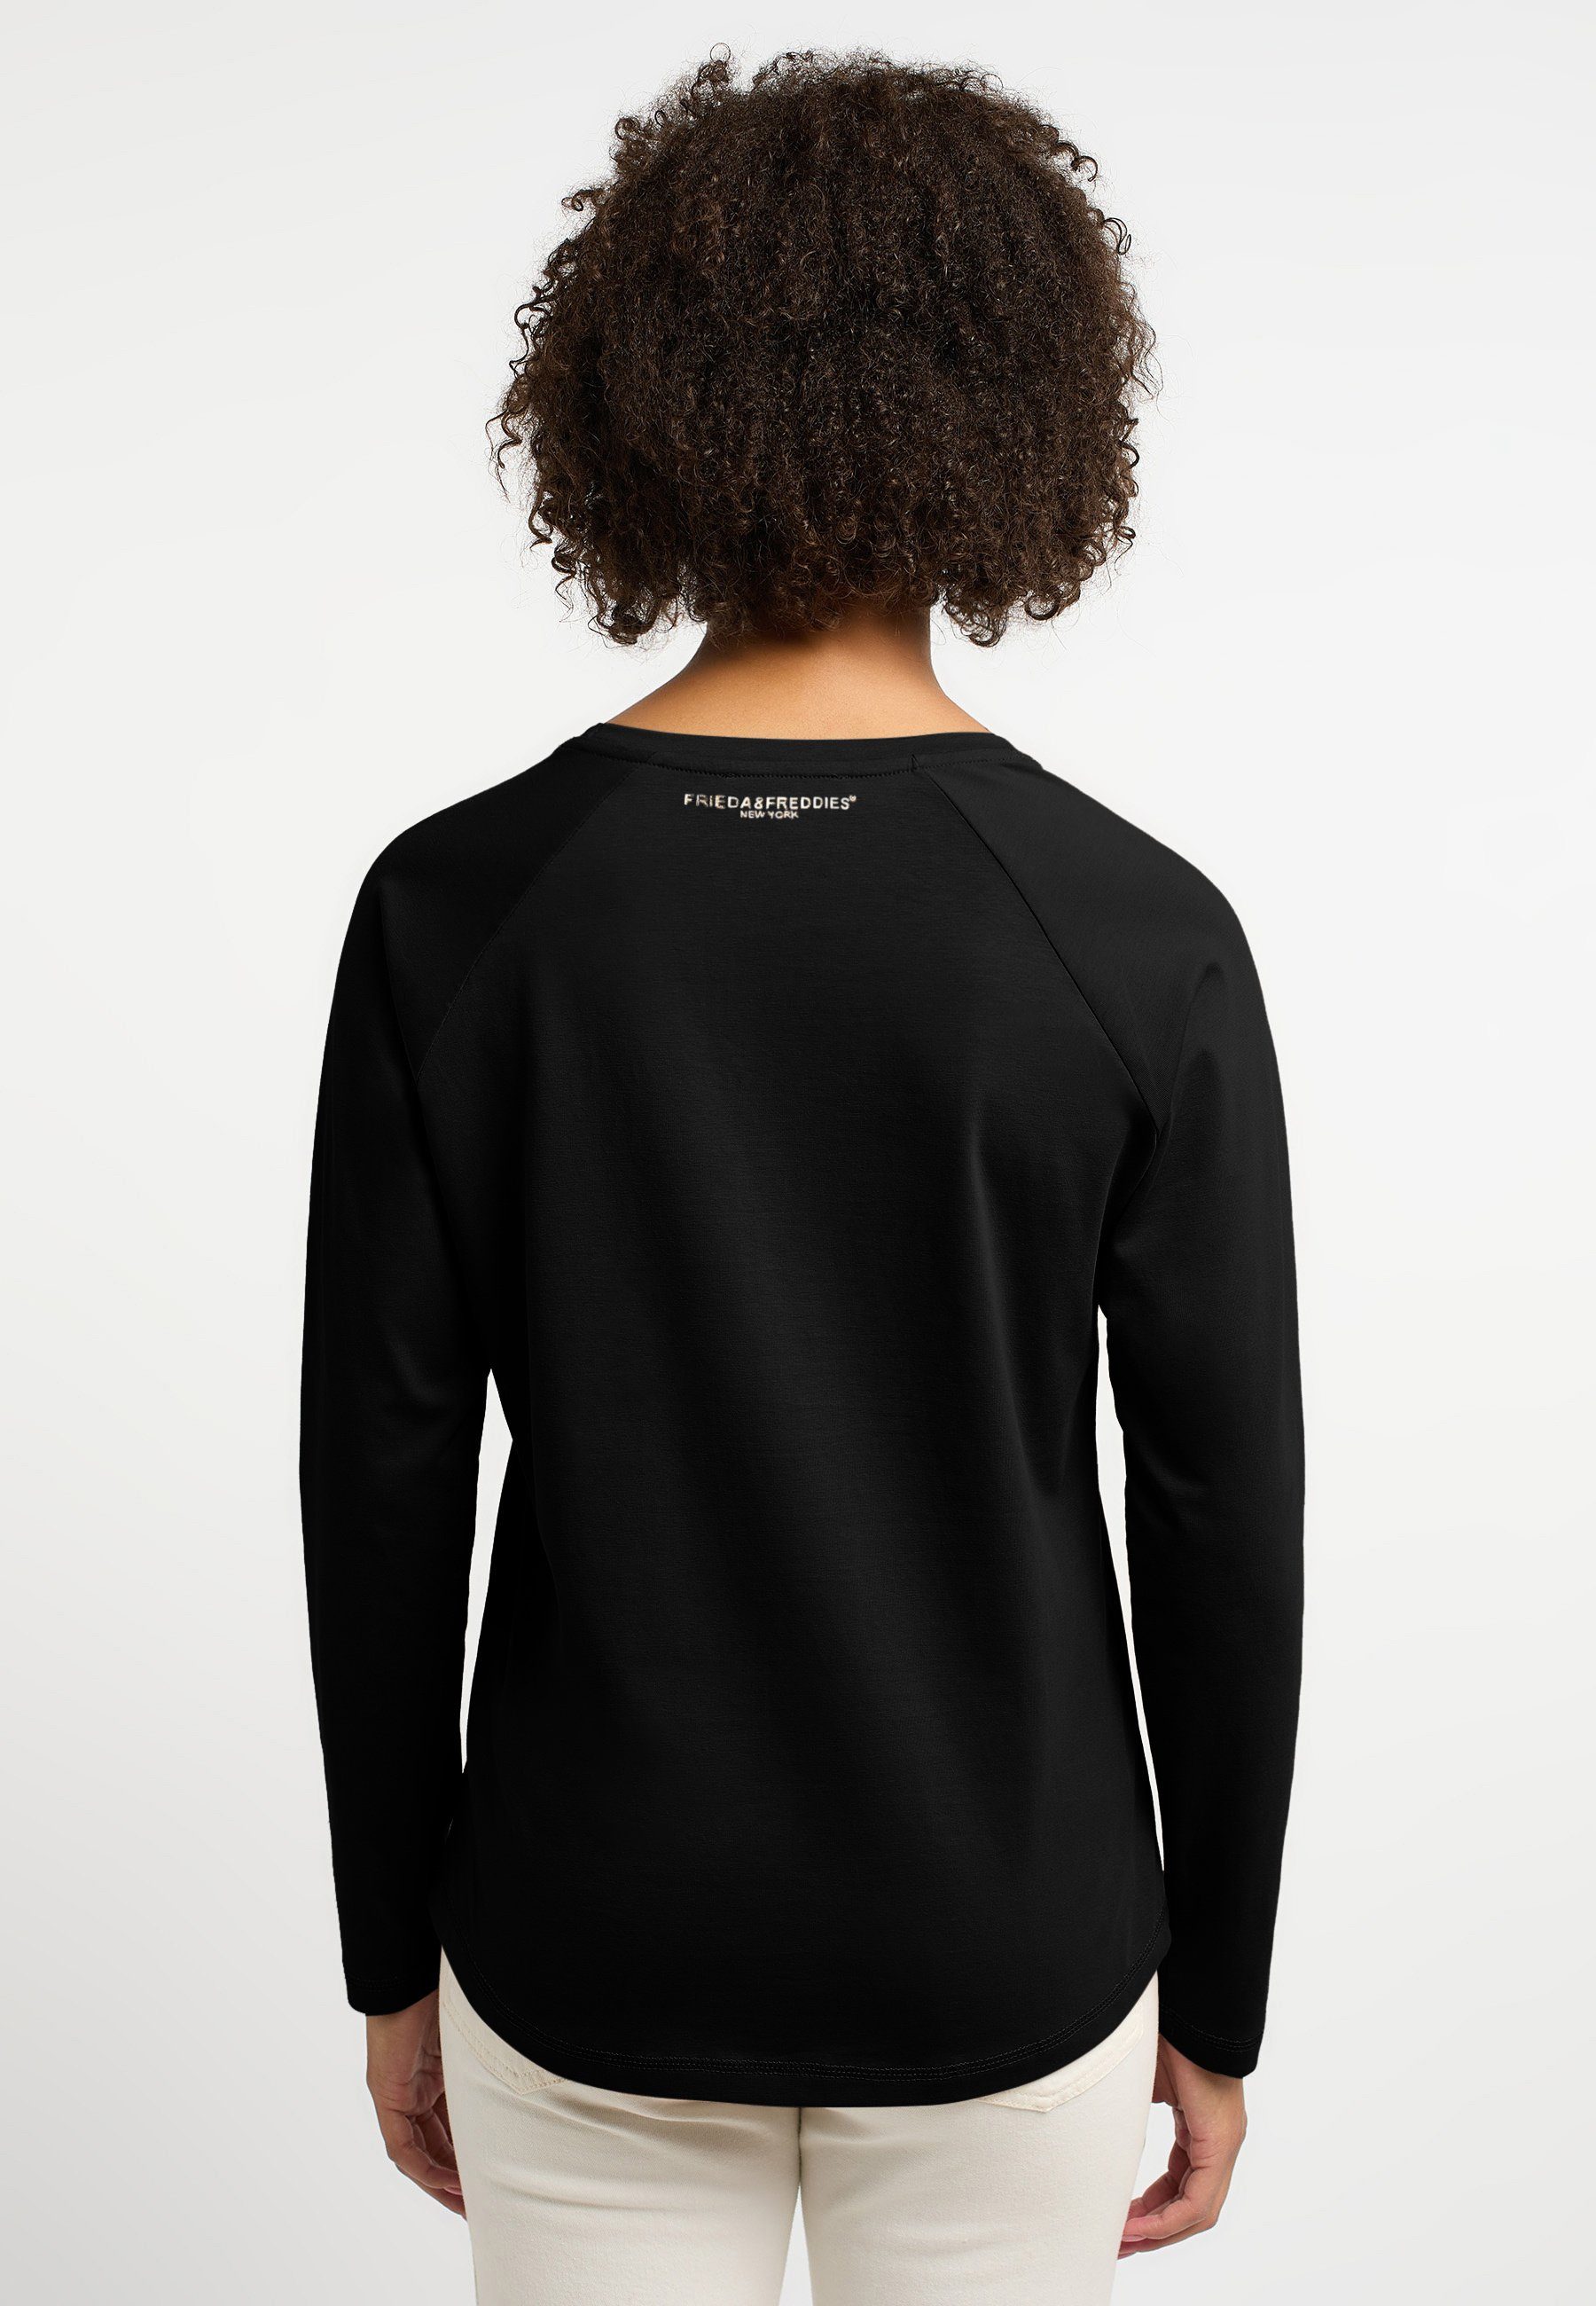 Frieda & Freddies NY dezenten BLACK Shirt mit Farbdetails Longsleeve Ls